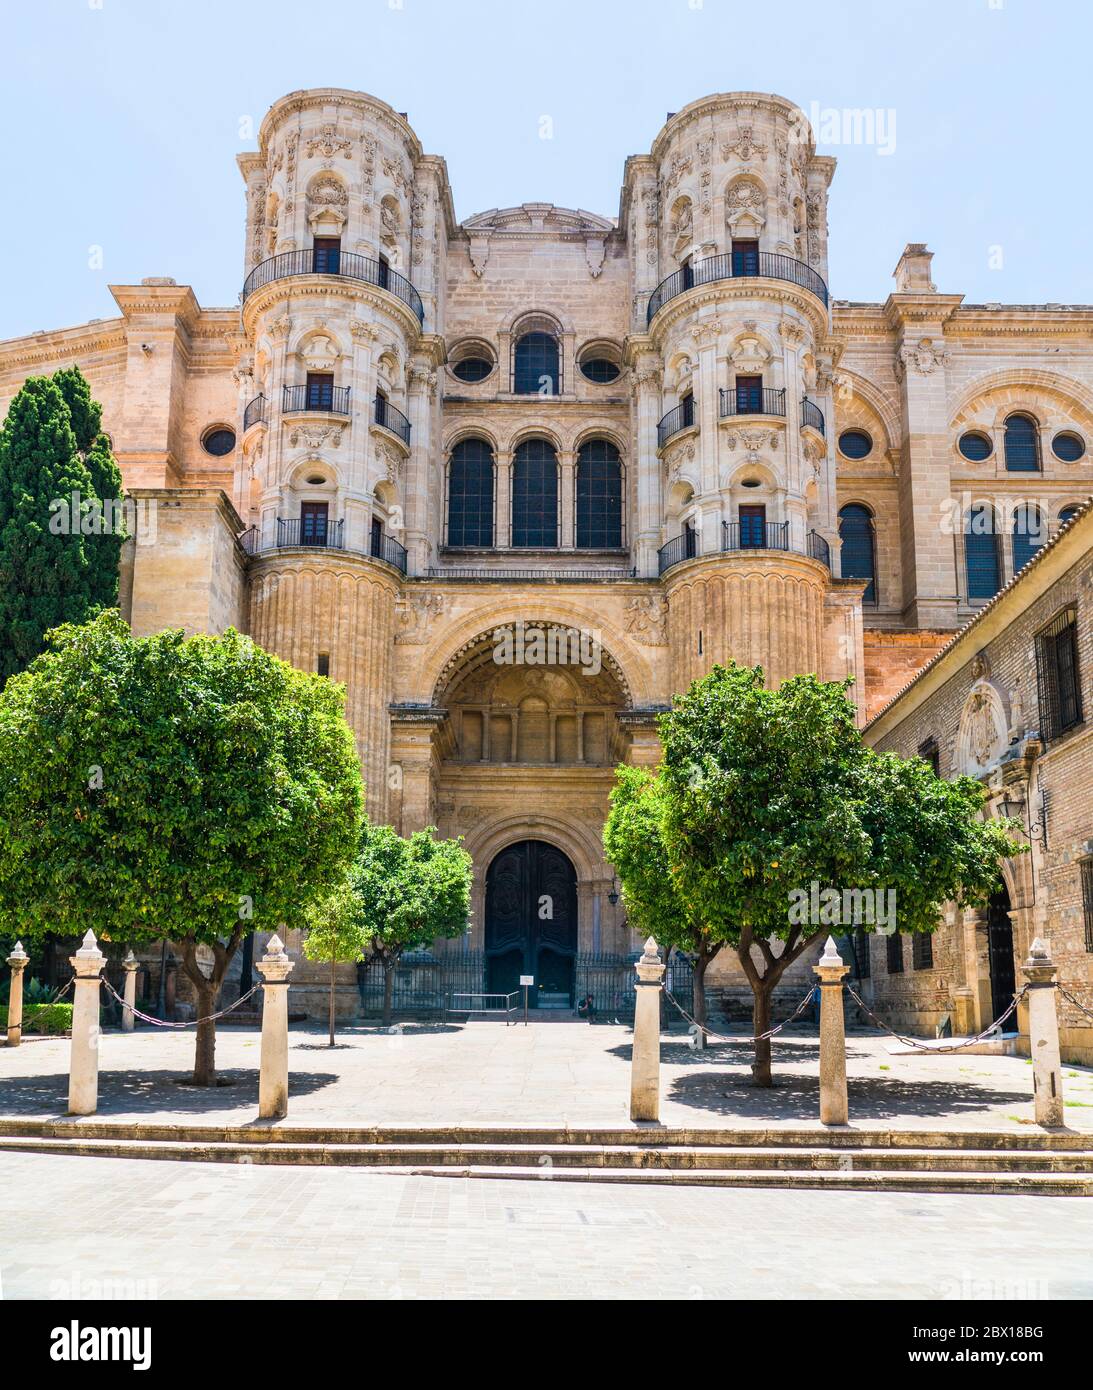 Malaga, Spanien, juni 27 2017: Eintritt in die Catedral de Malaga Stockfoto